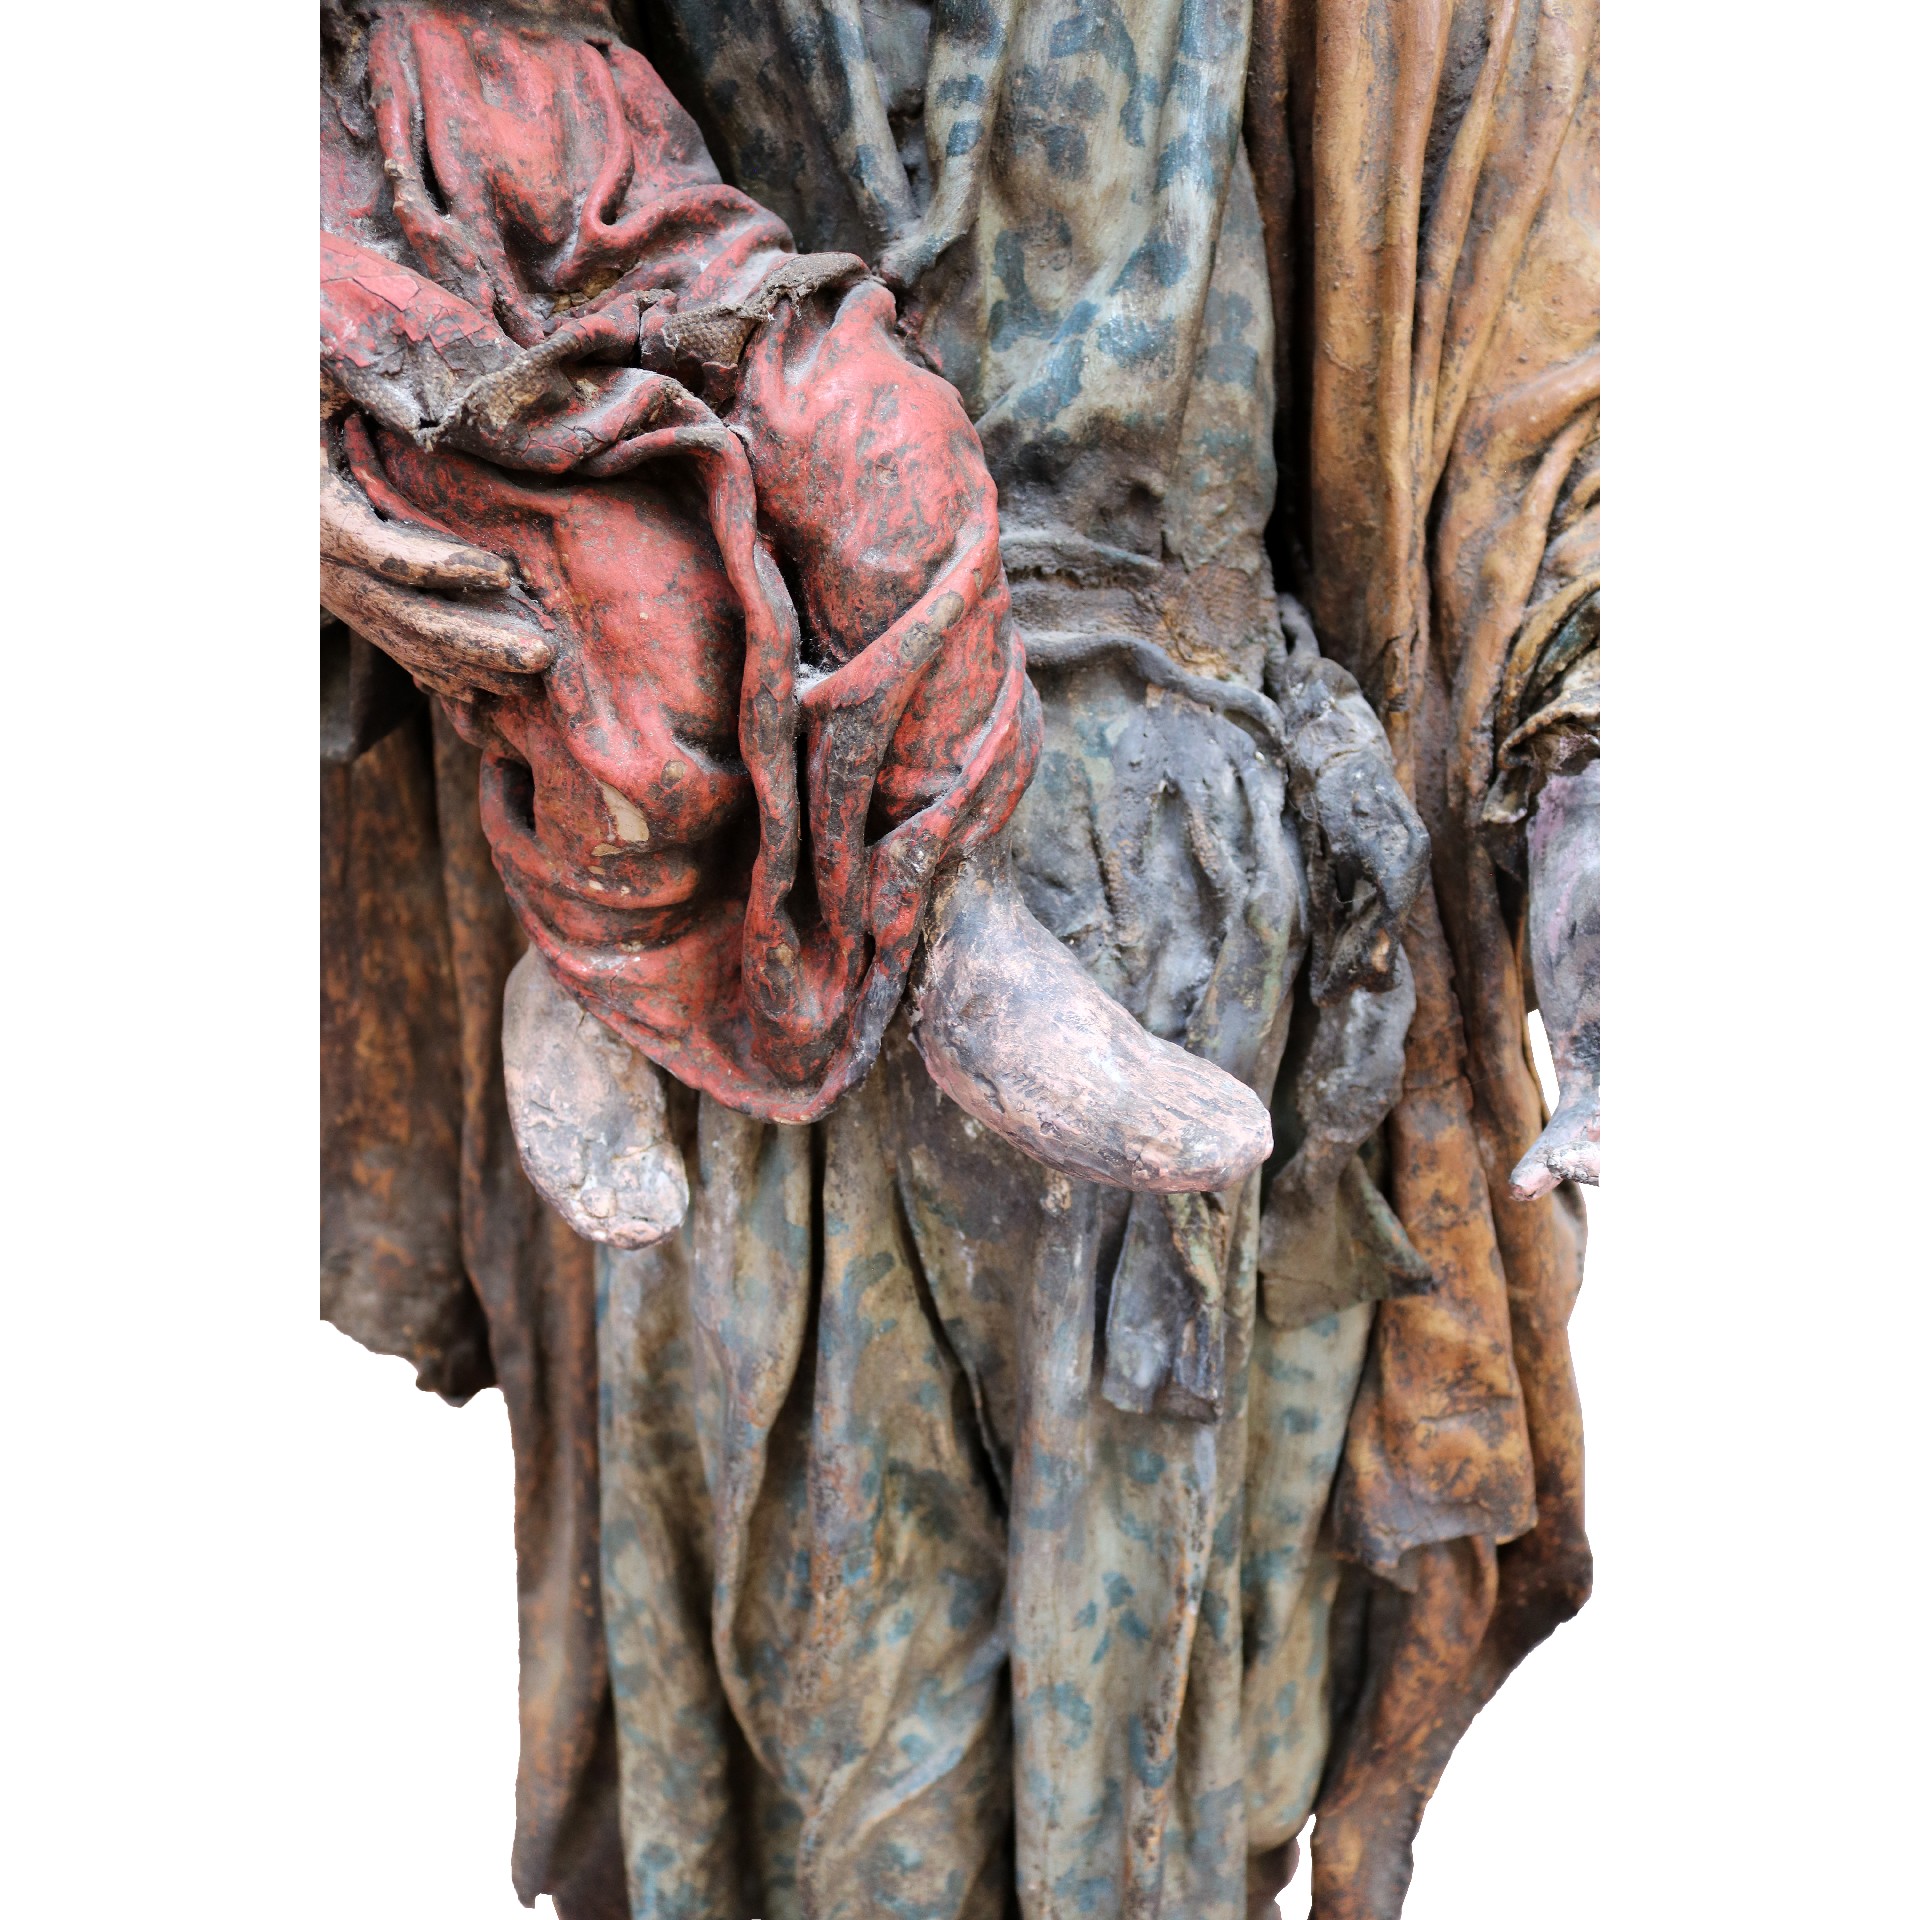 Statua antica in legno e tela dipinta. - 1